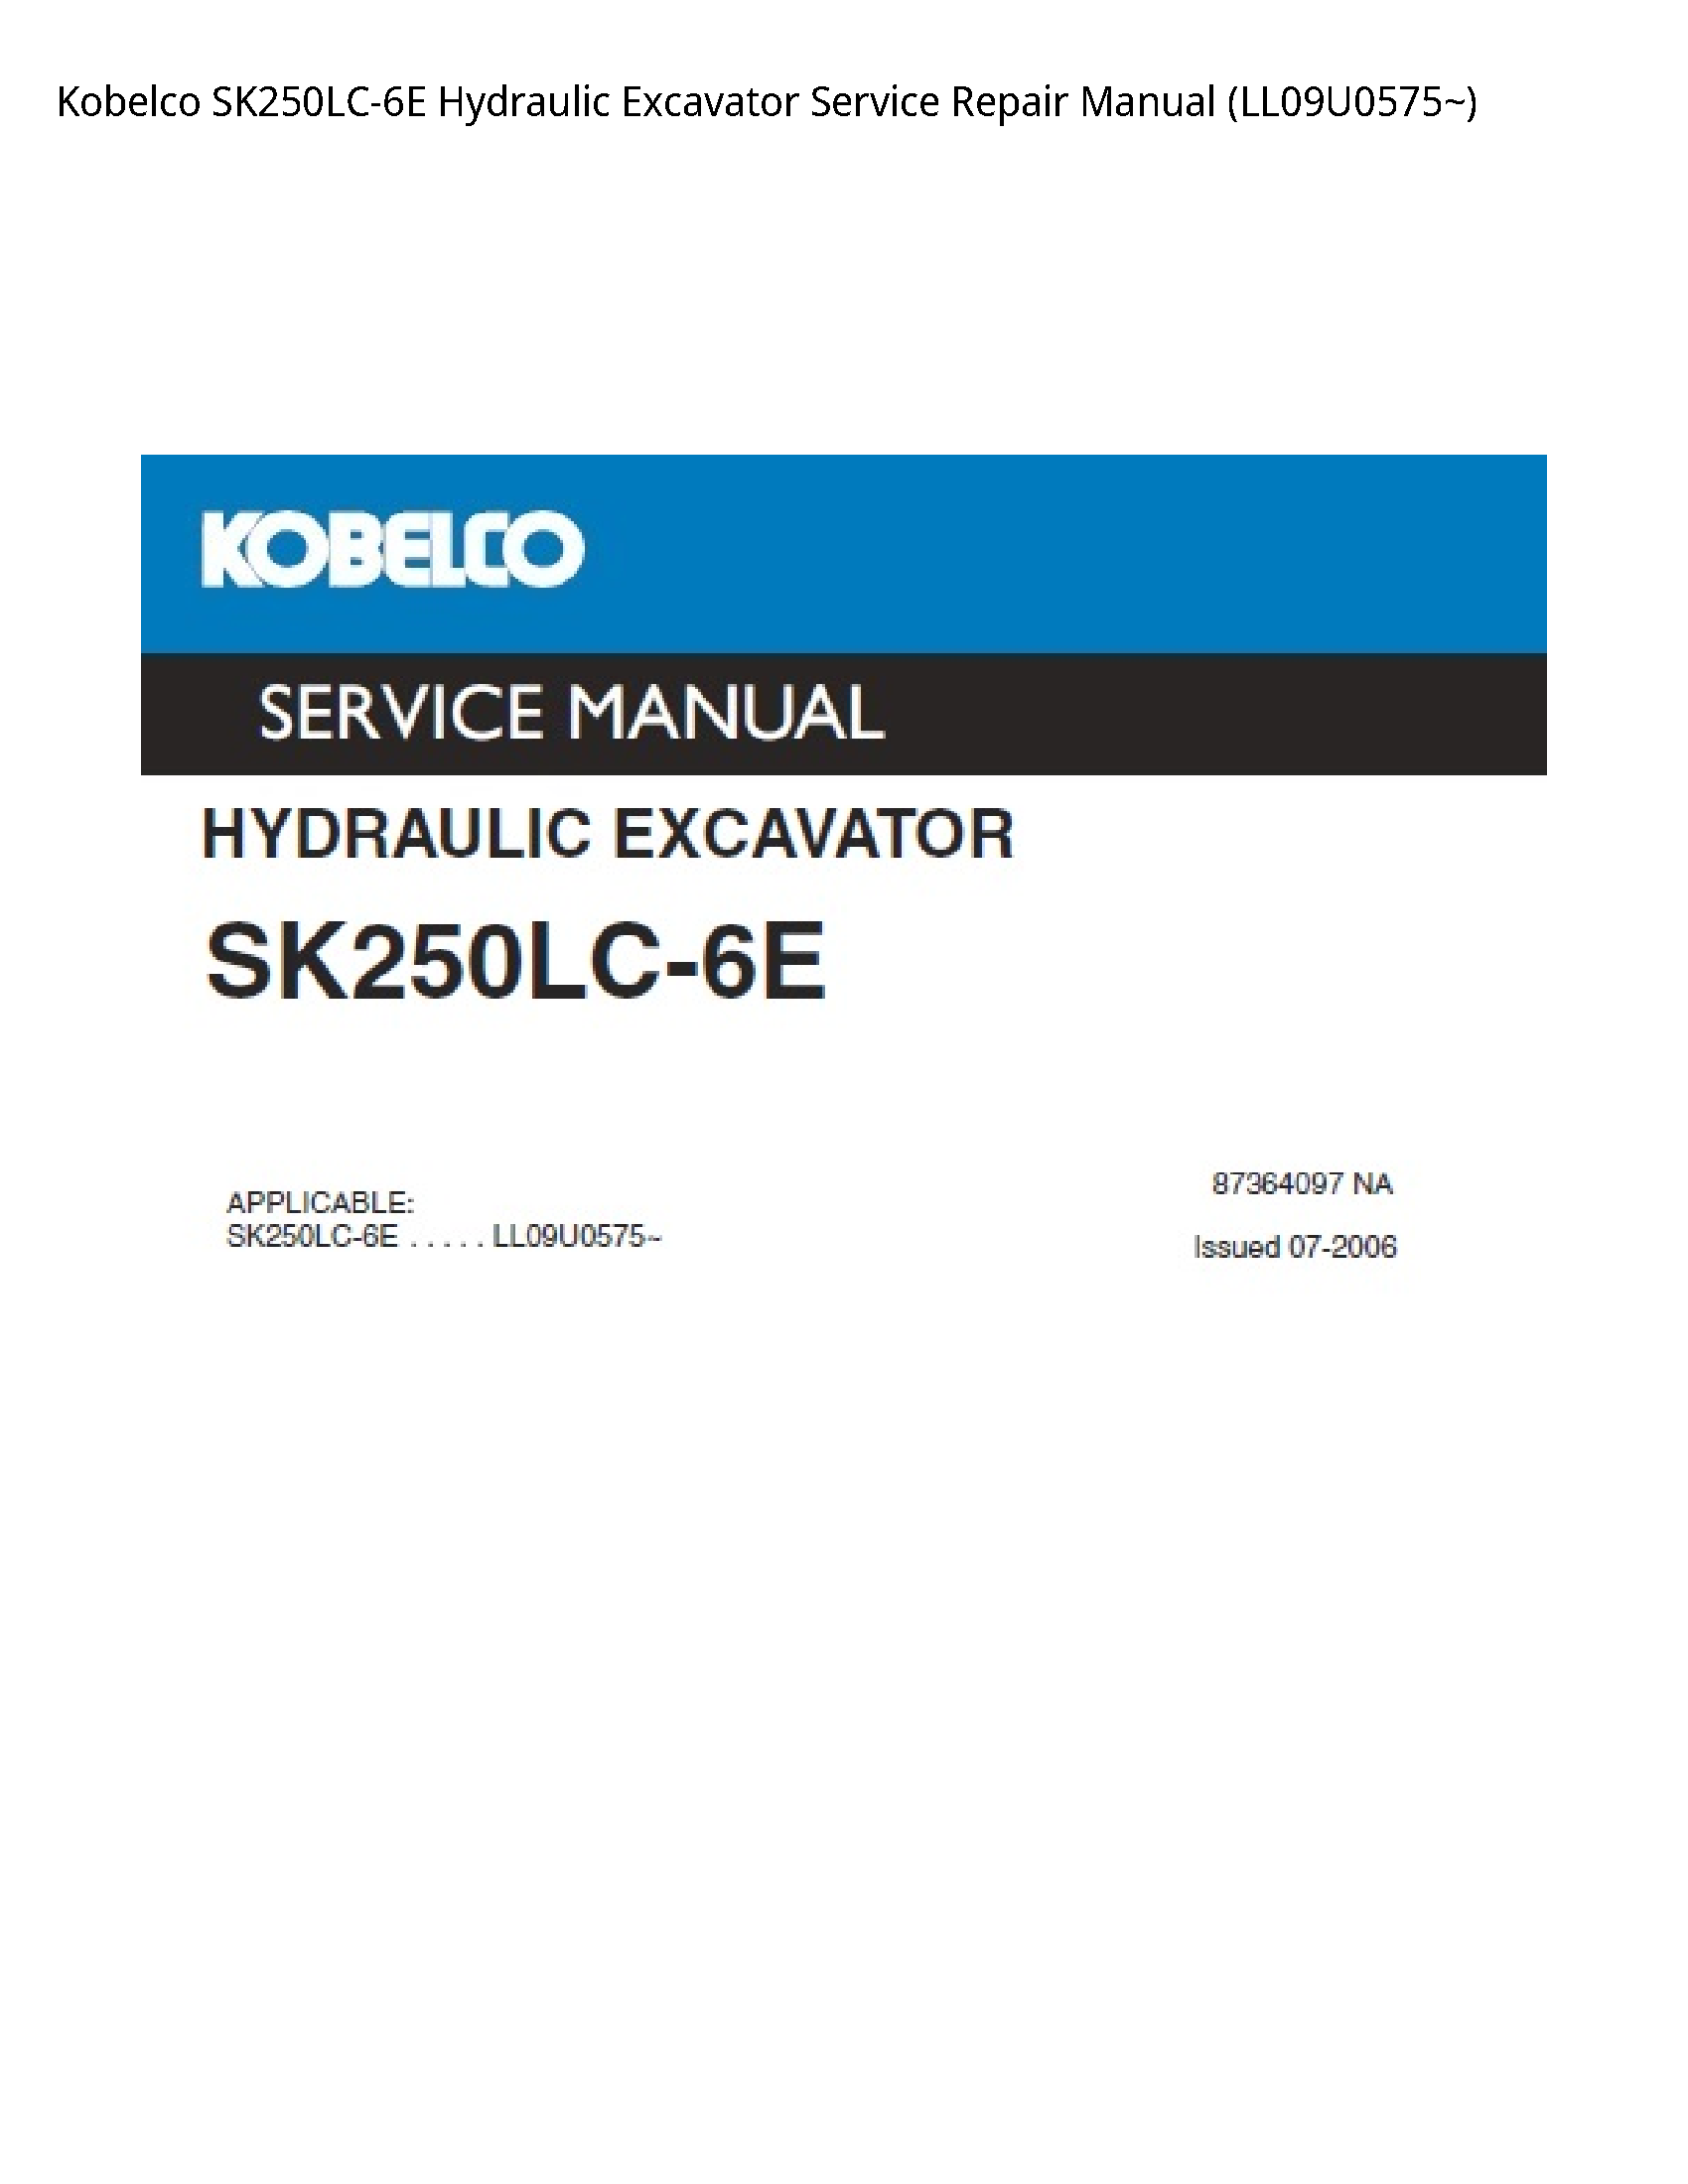 Kobelco SK250LC-6E Hydraulic Excavator manual